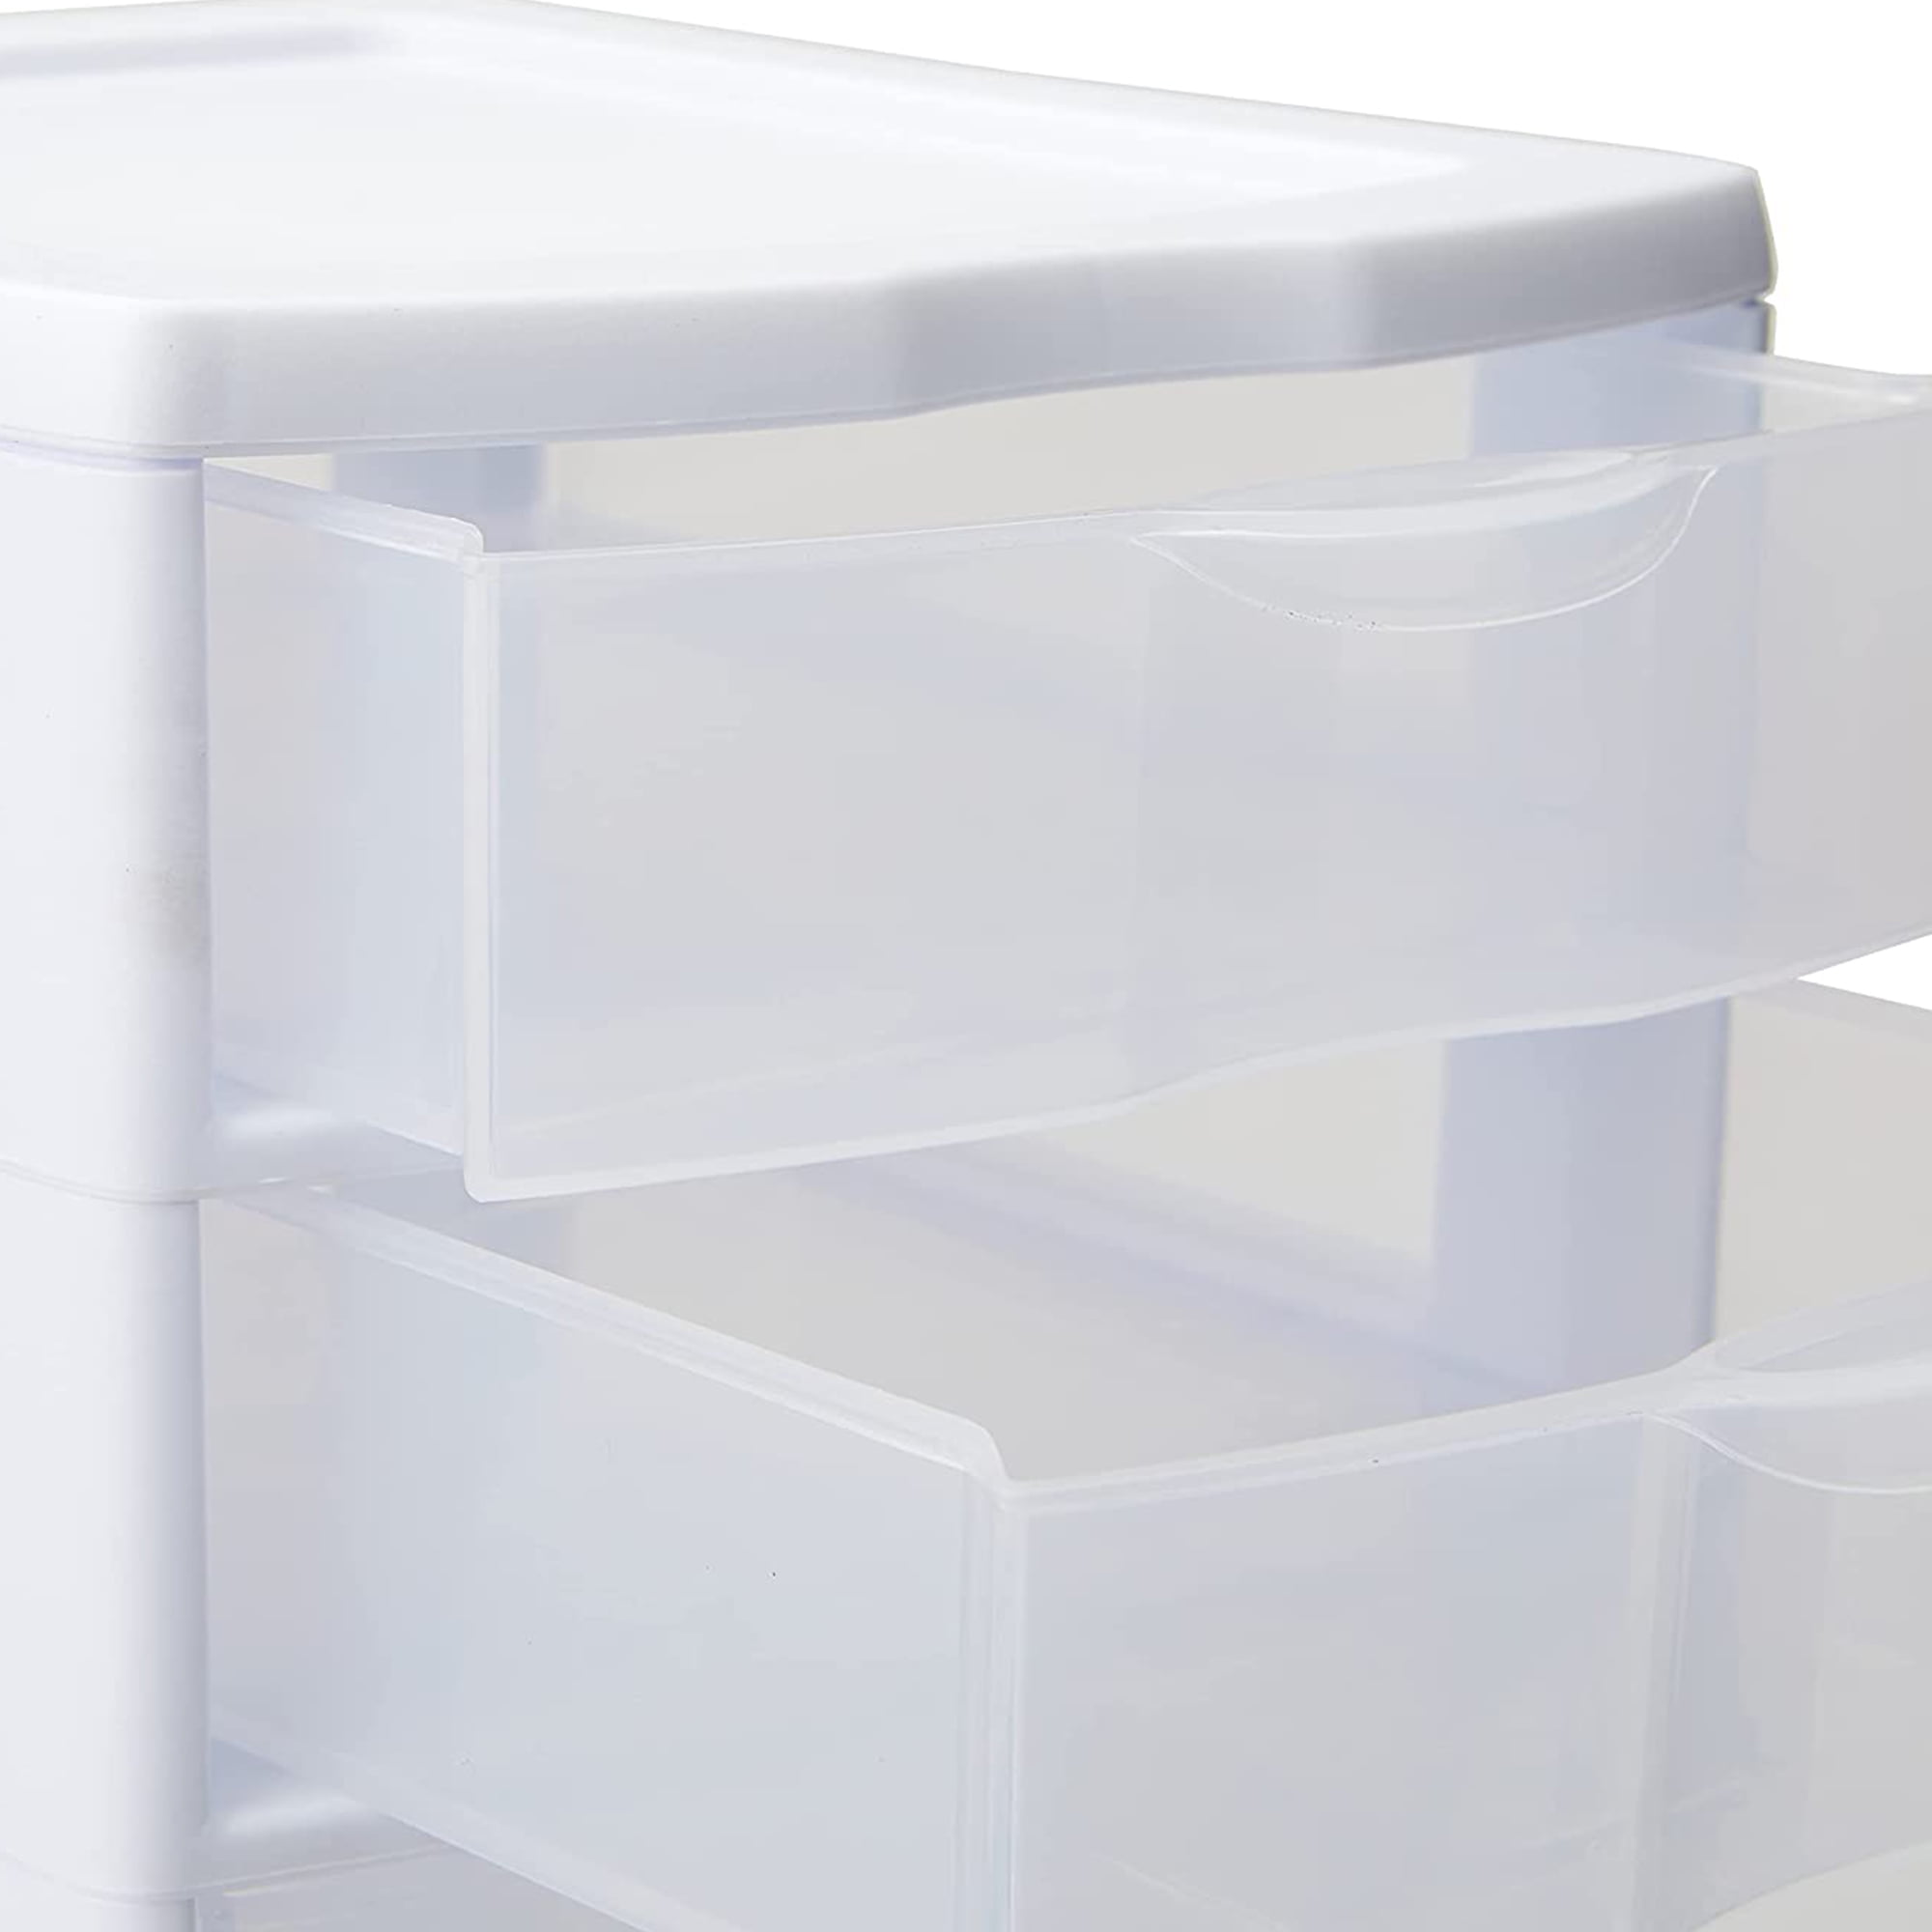 thinkstar Mini Plastic Drawers Organizer 5 Drawer Storage Organizer Plastic  Storage Bins With Drawers Space Saving Small Plastic Dra…